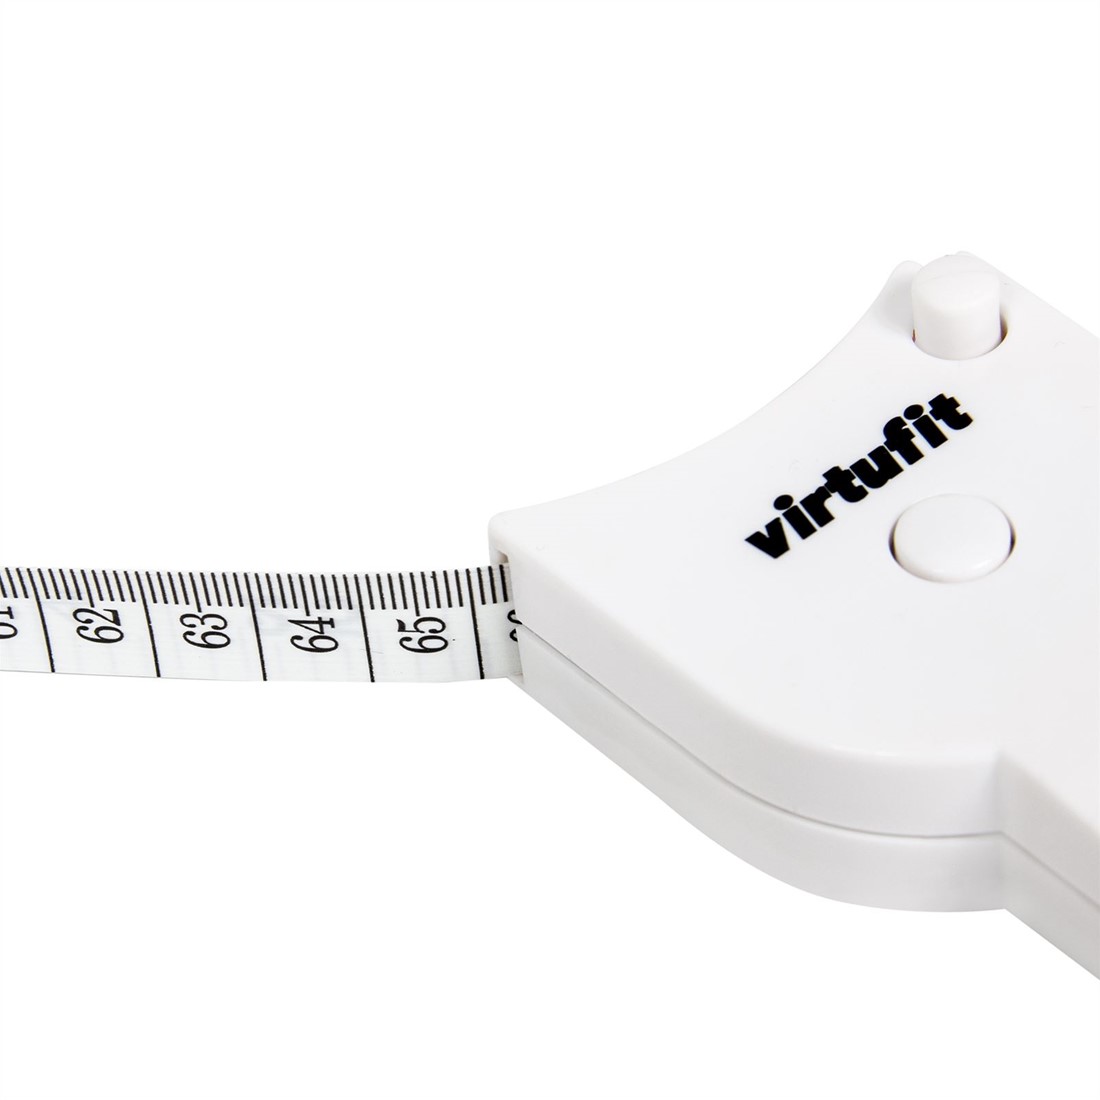 Metene Body Fat Scale with Body Tape Measure, Digital Bathroom